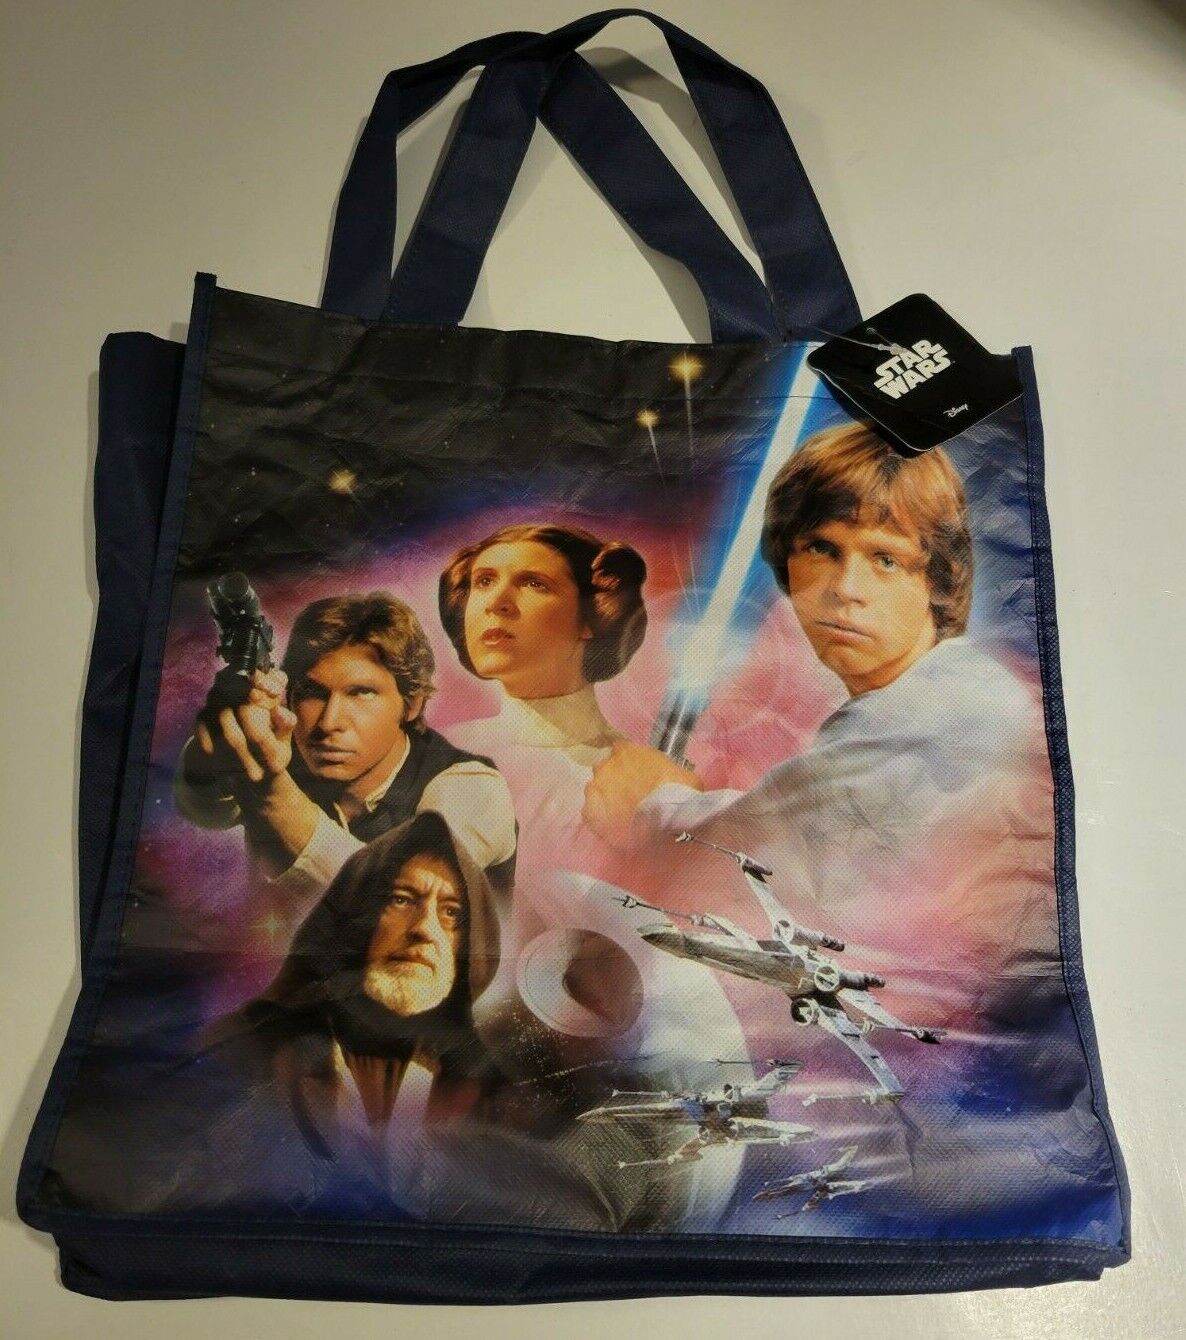 Blue Star Wars Reusable Grocery Shopping Bag 13" x 12" x 6"